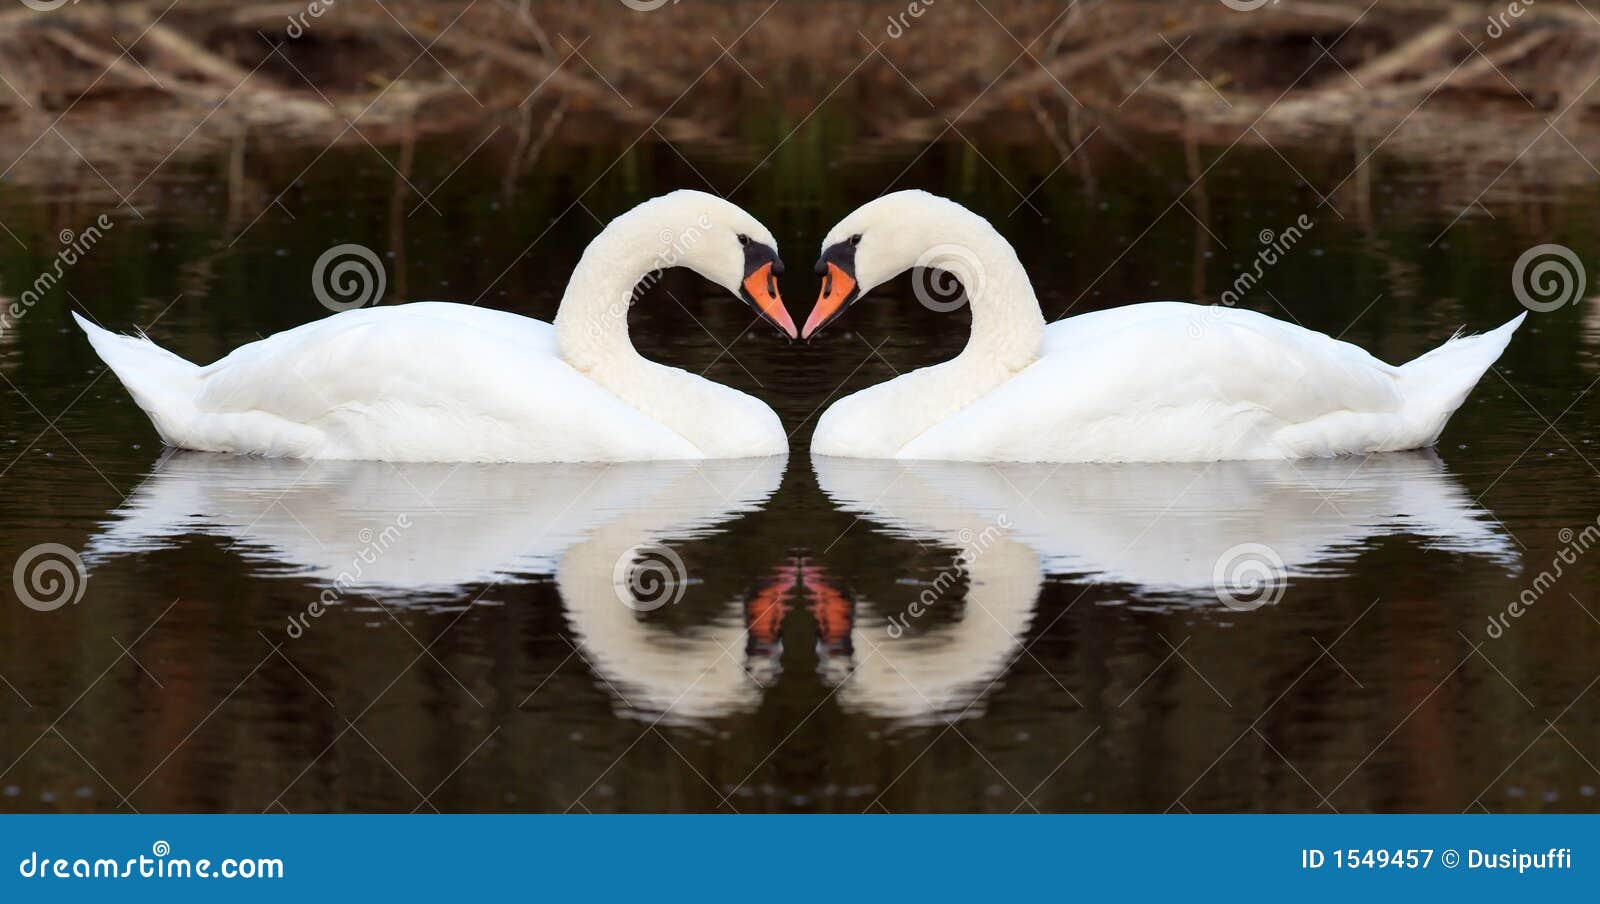 swan affection